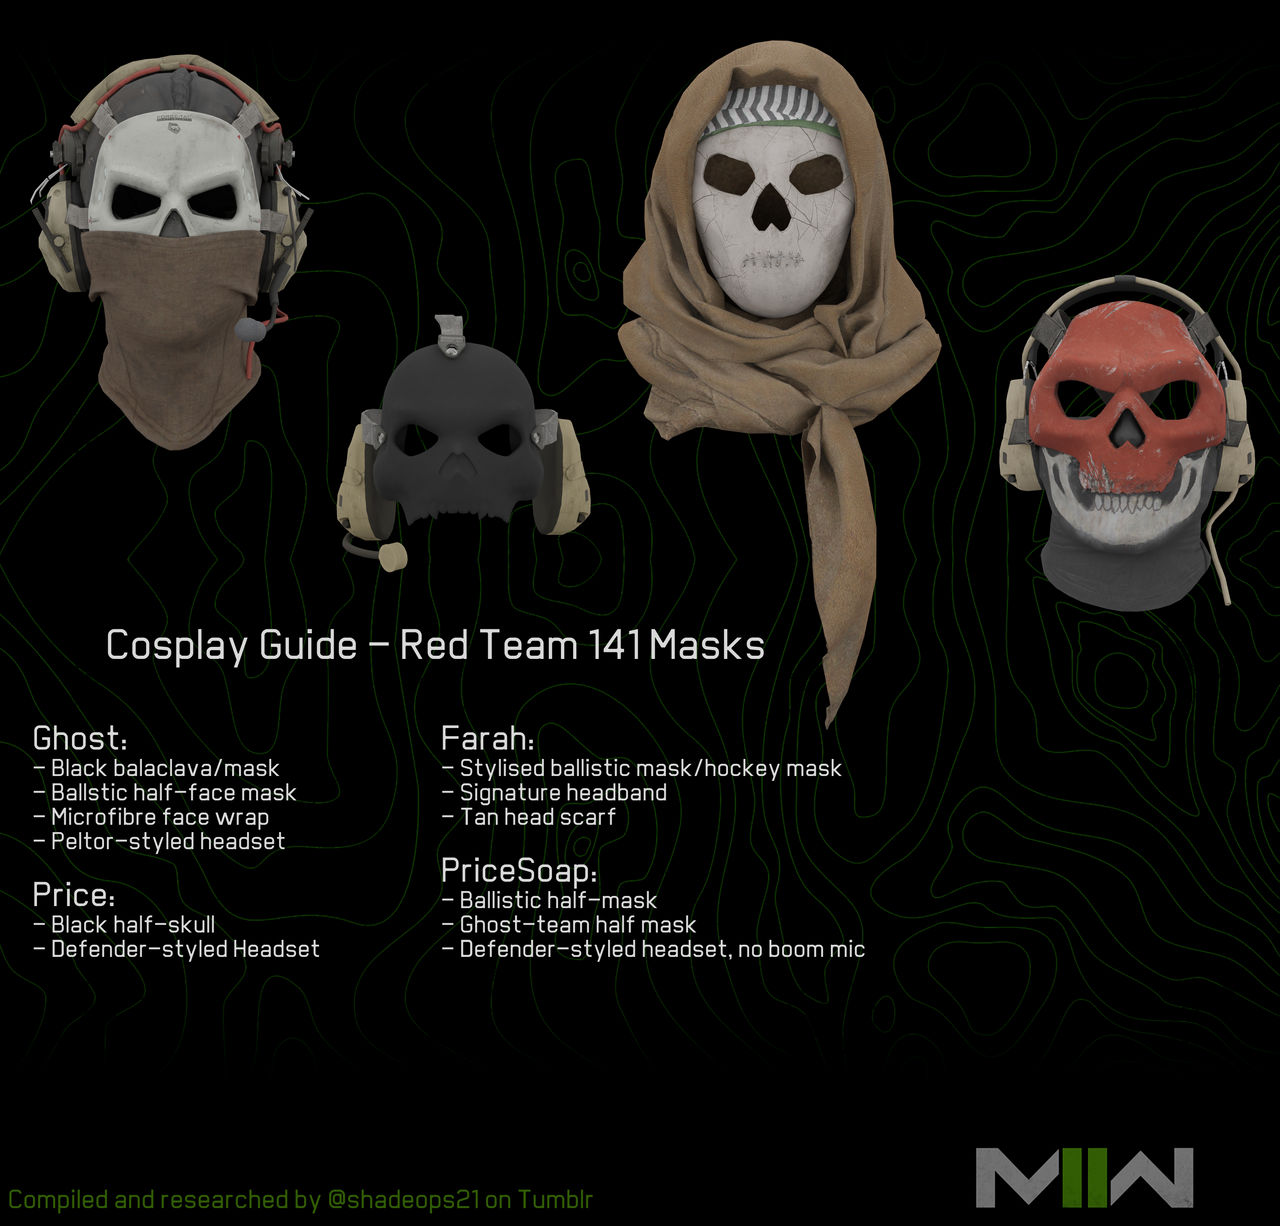 COD MW 2 Simon 'Ghost' Riley Skull Mask Balaclava Cosplay